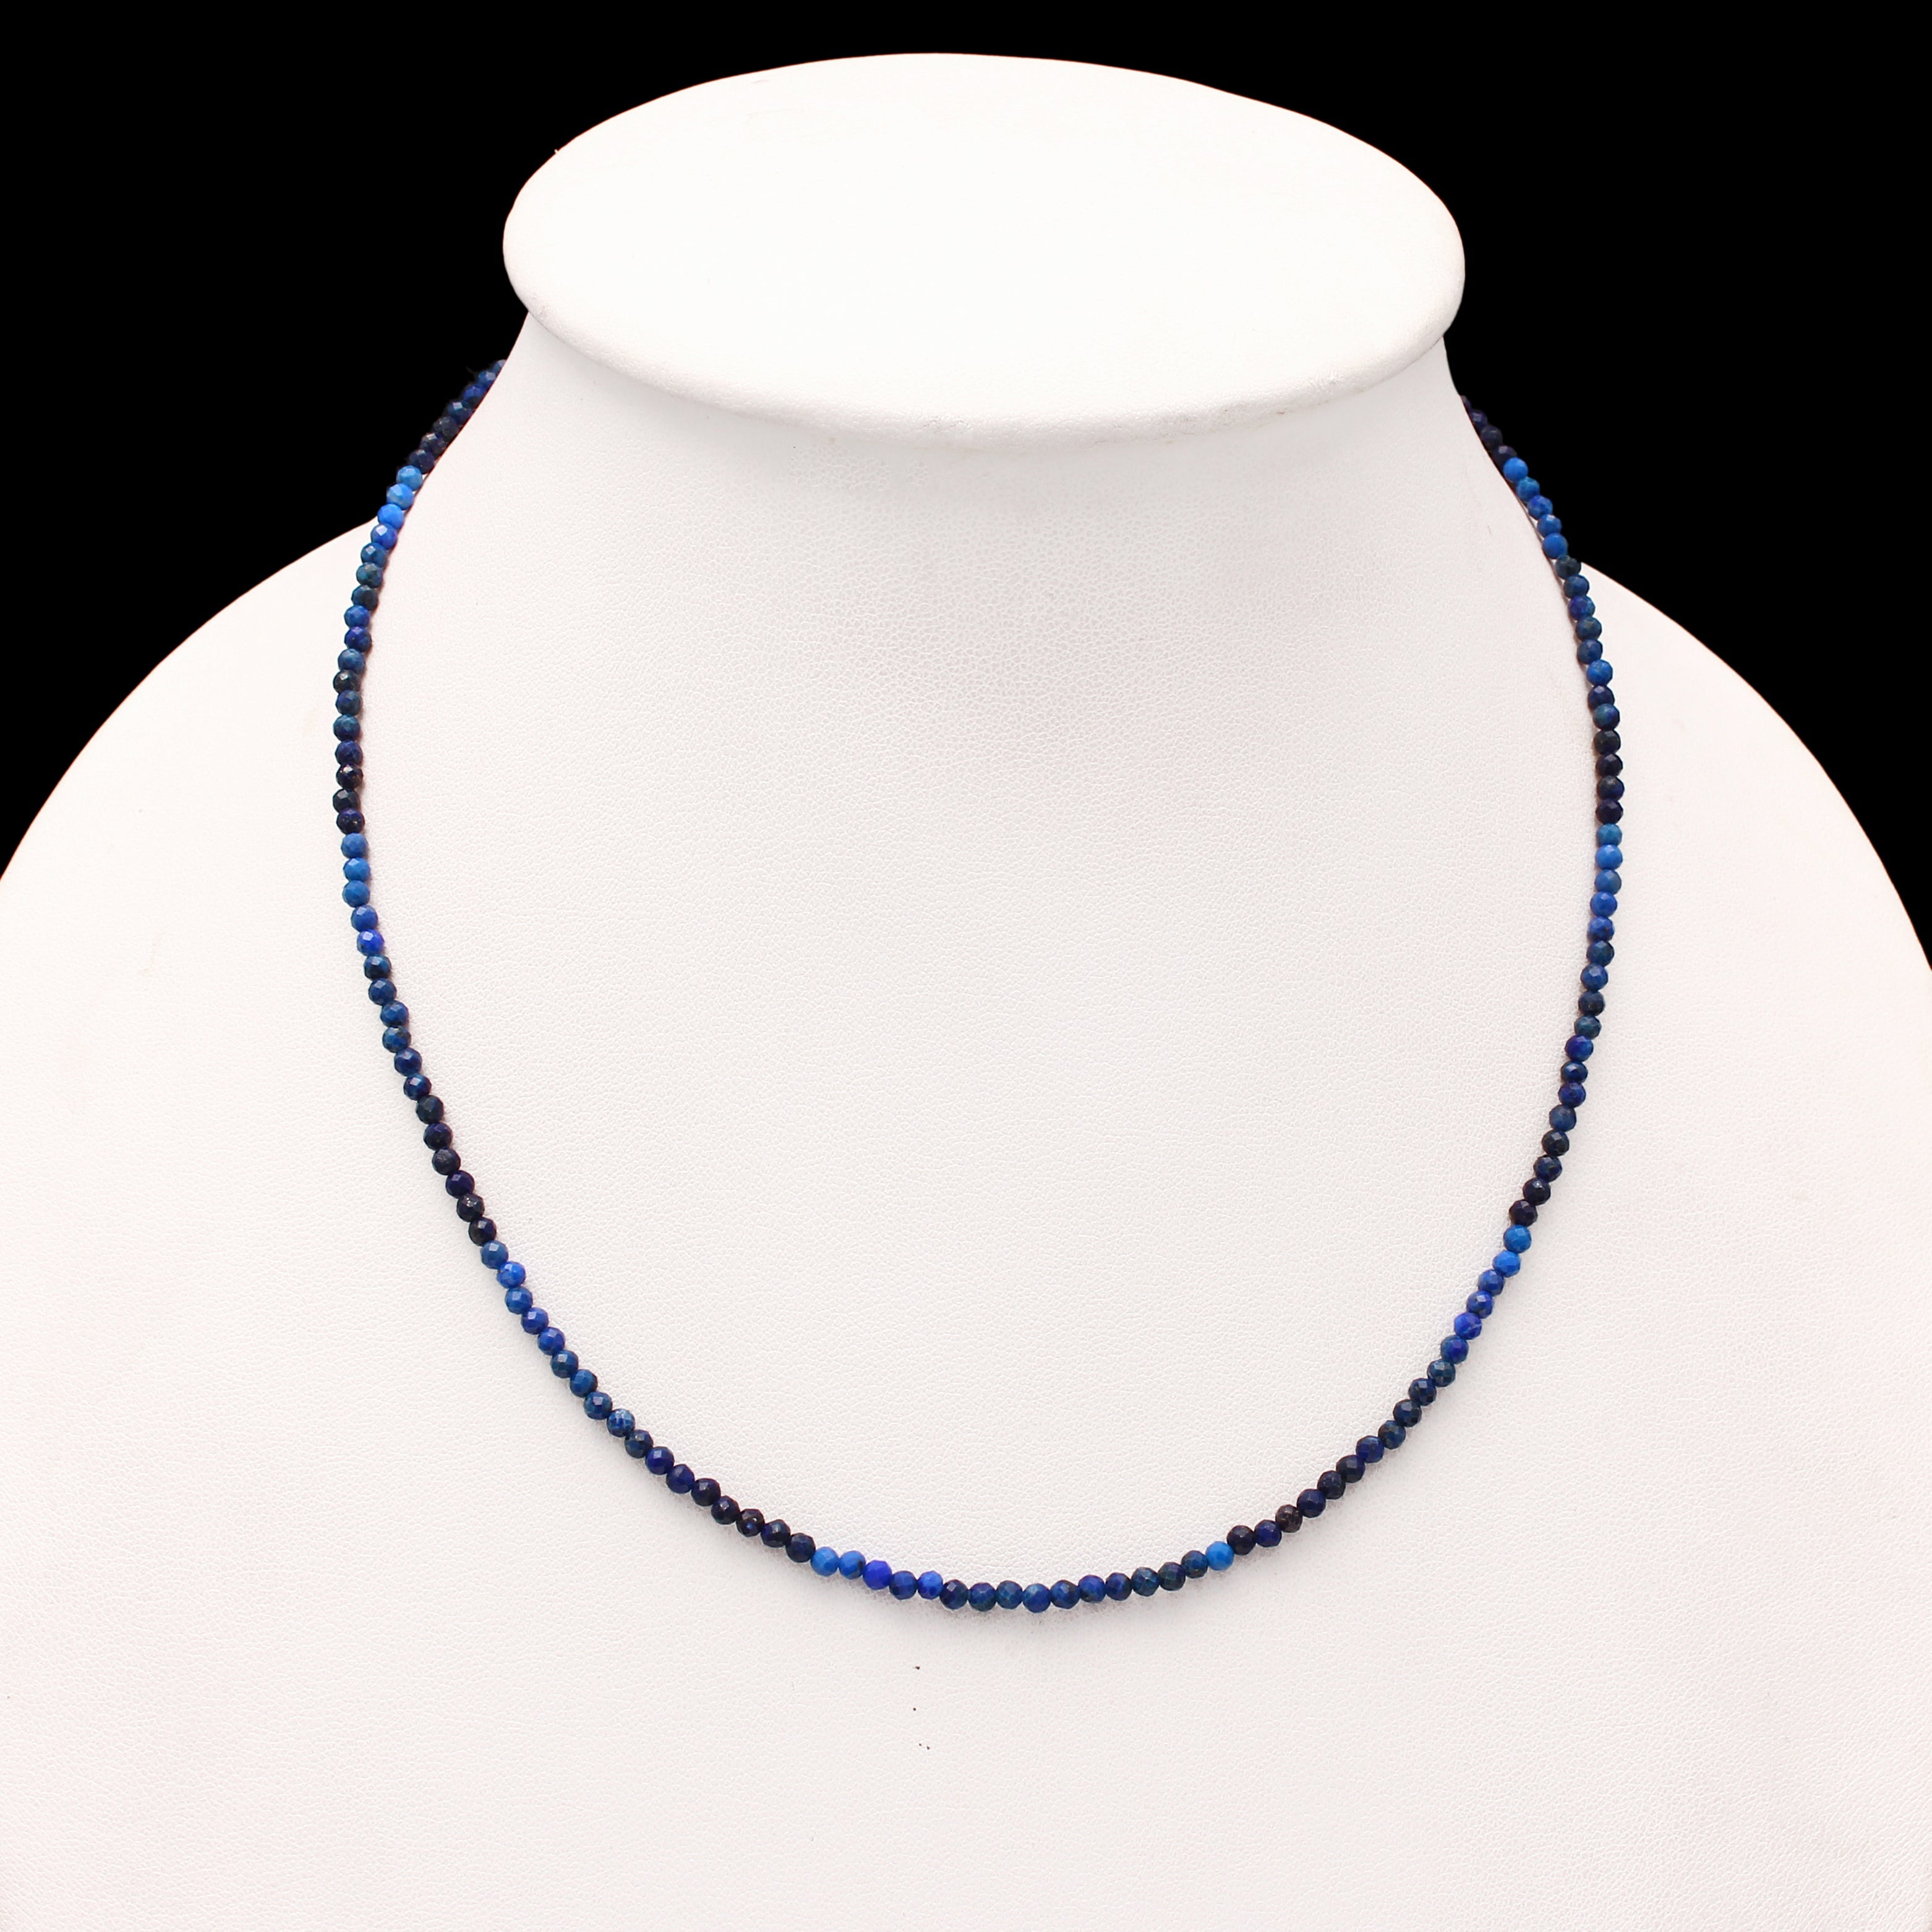 Stunning Vintage Lapis Lazuli Necklace 30” | eBay